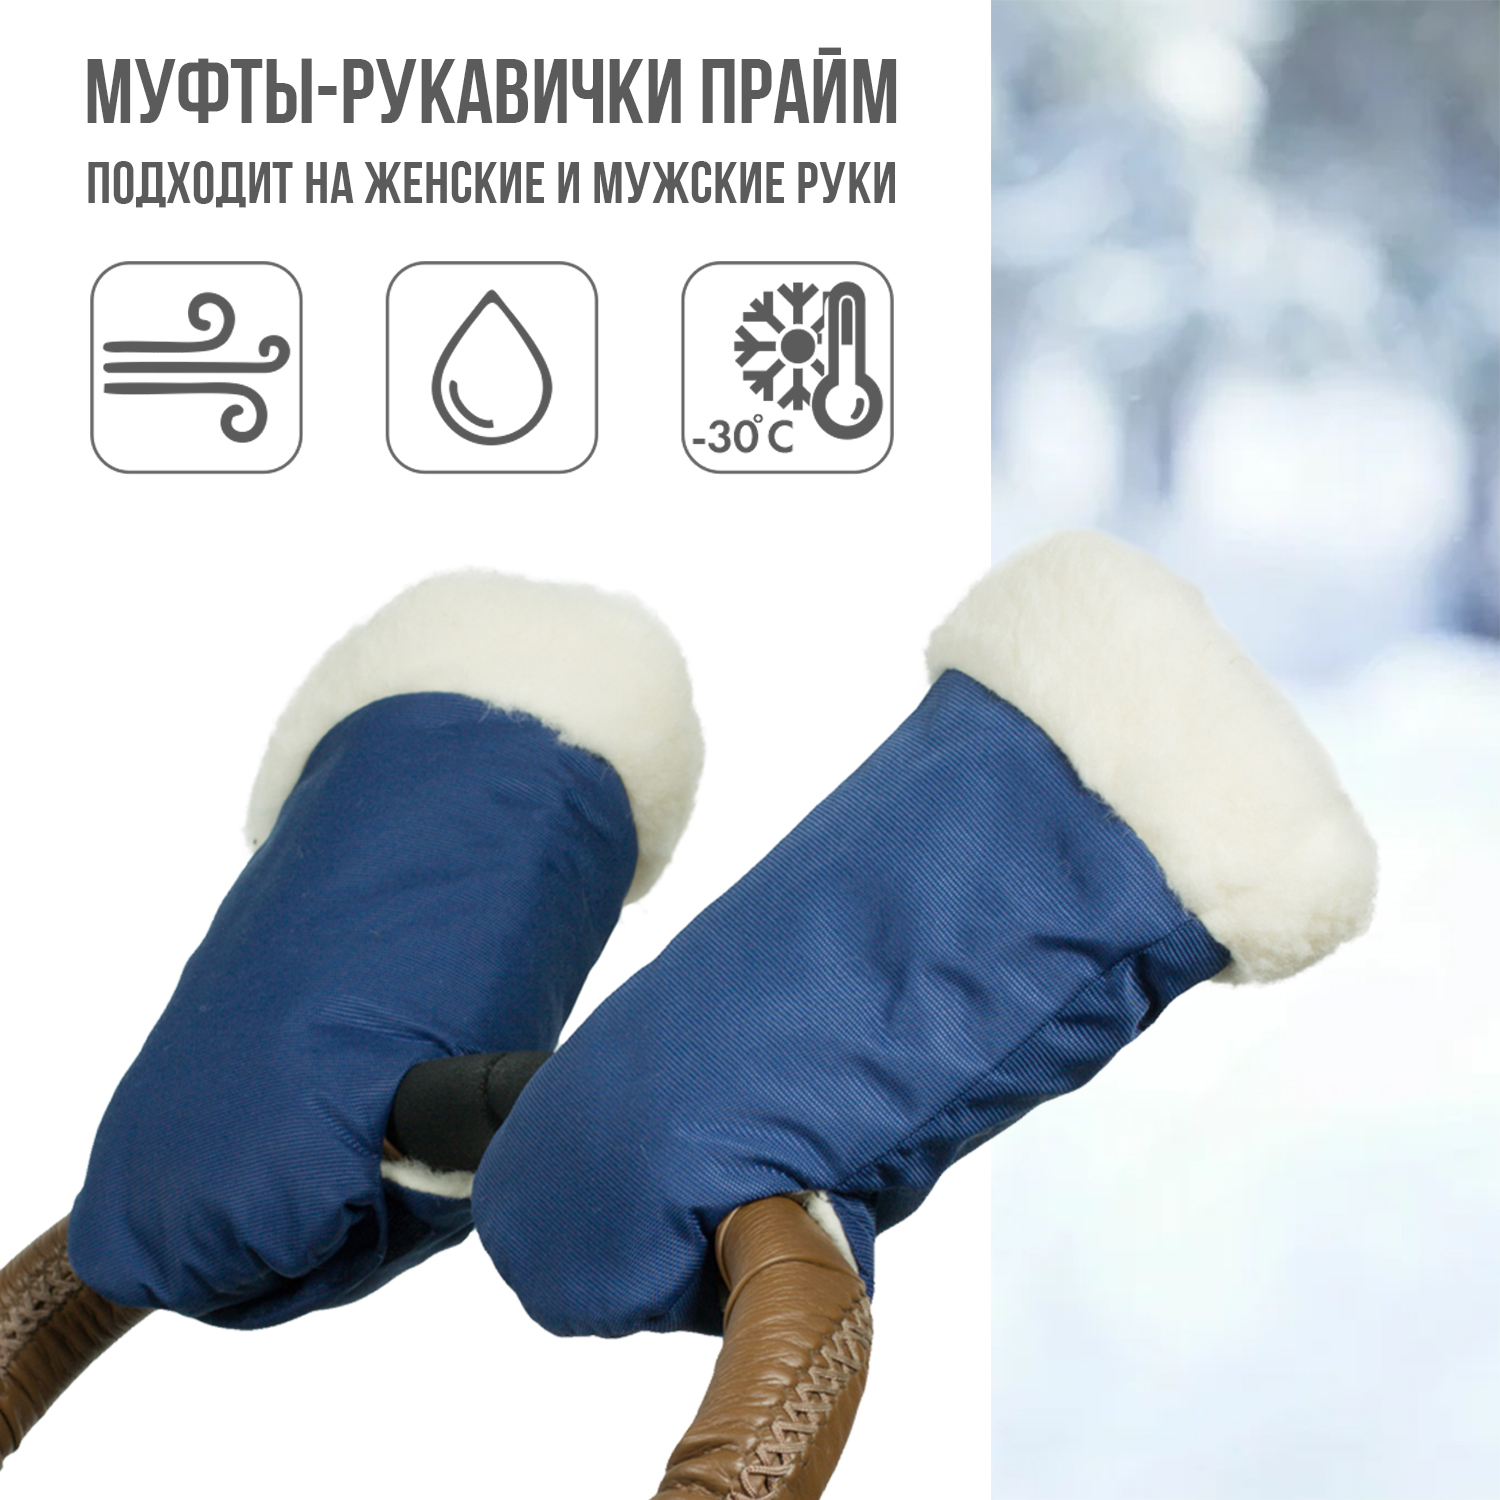 Муфта-рукавички для коляски Чудо-чадо меховая Прайм синяя МРМ03-001 - фото 1